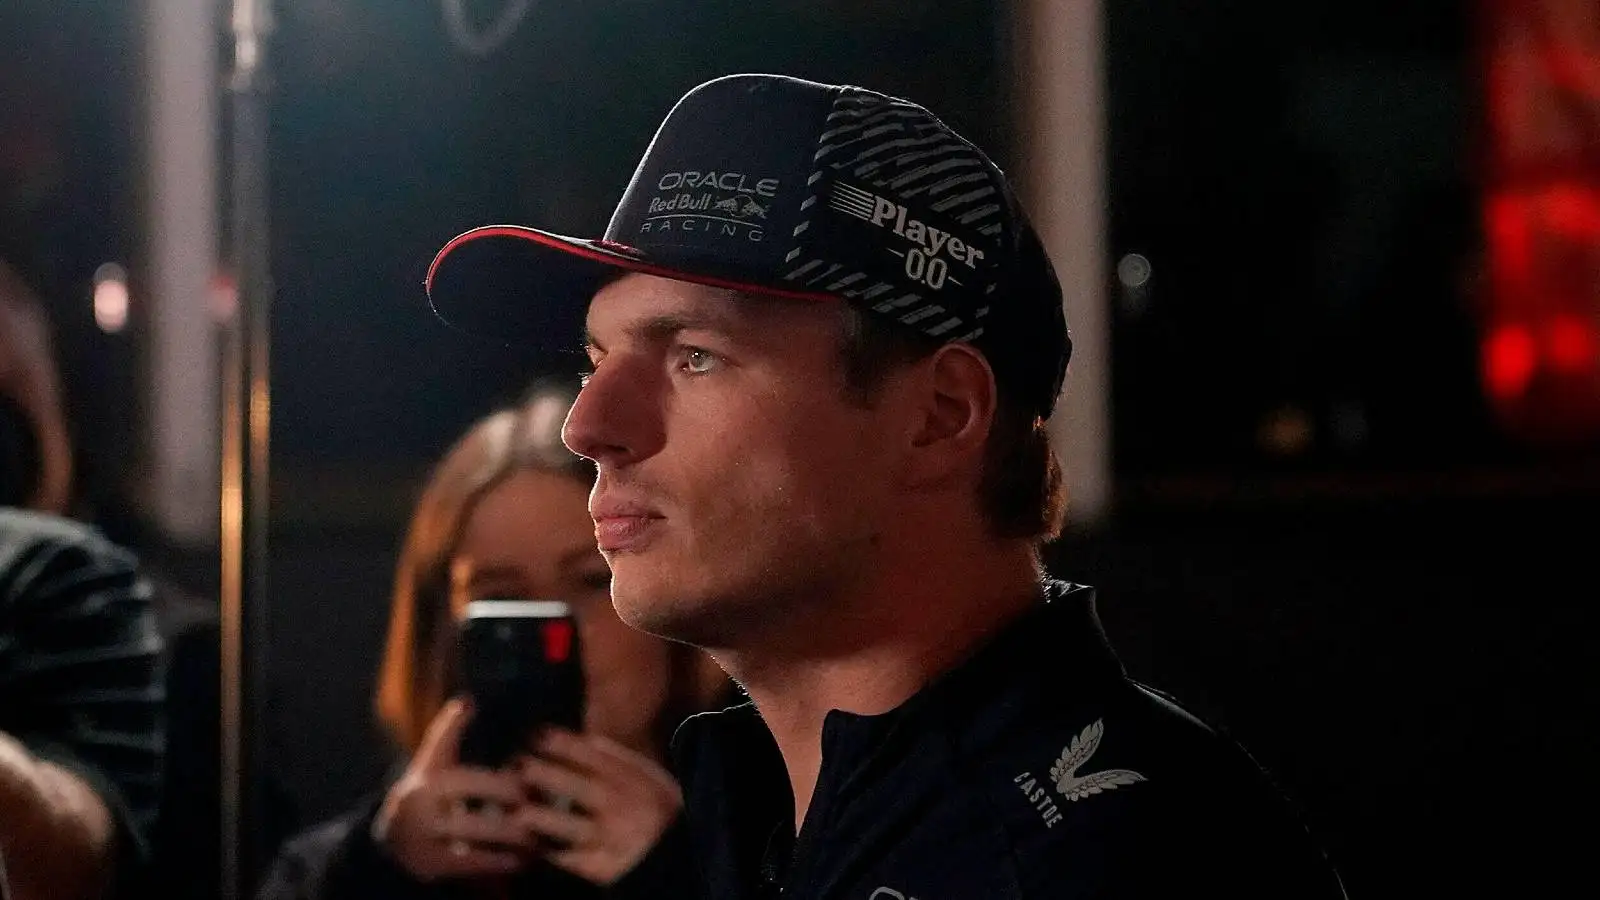 Red Bull driver Max Verstappen looks serious as he talks to media in Las Vegas.